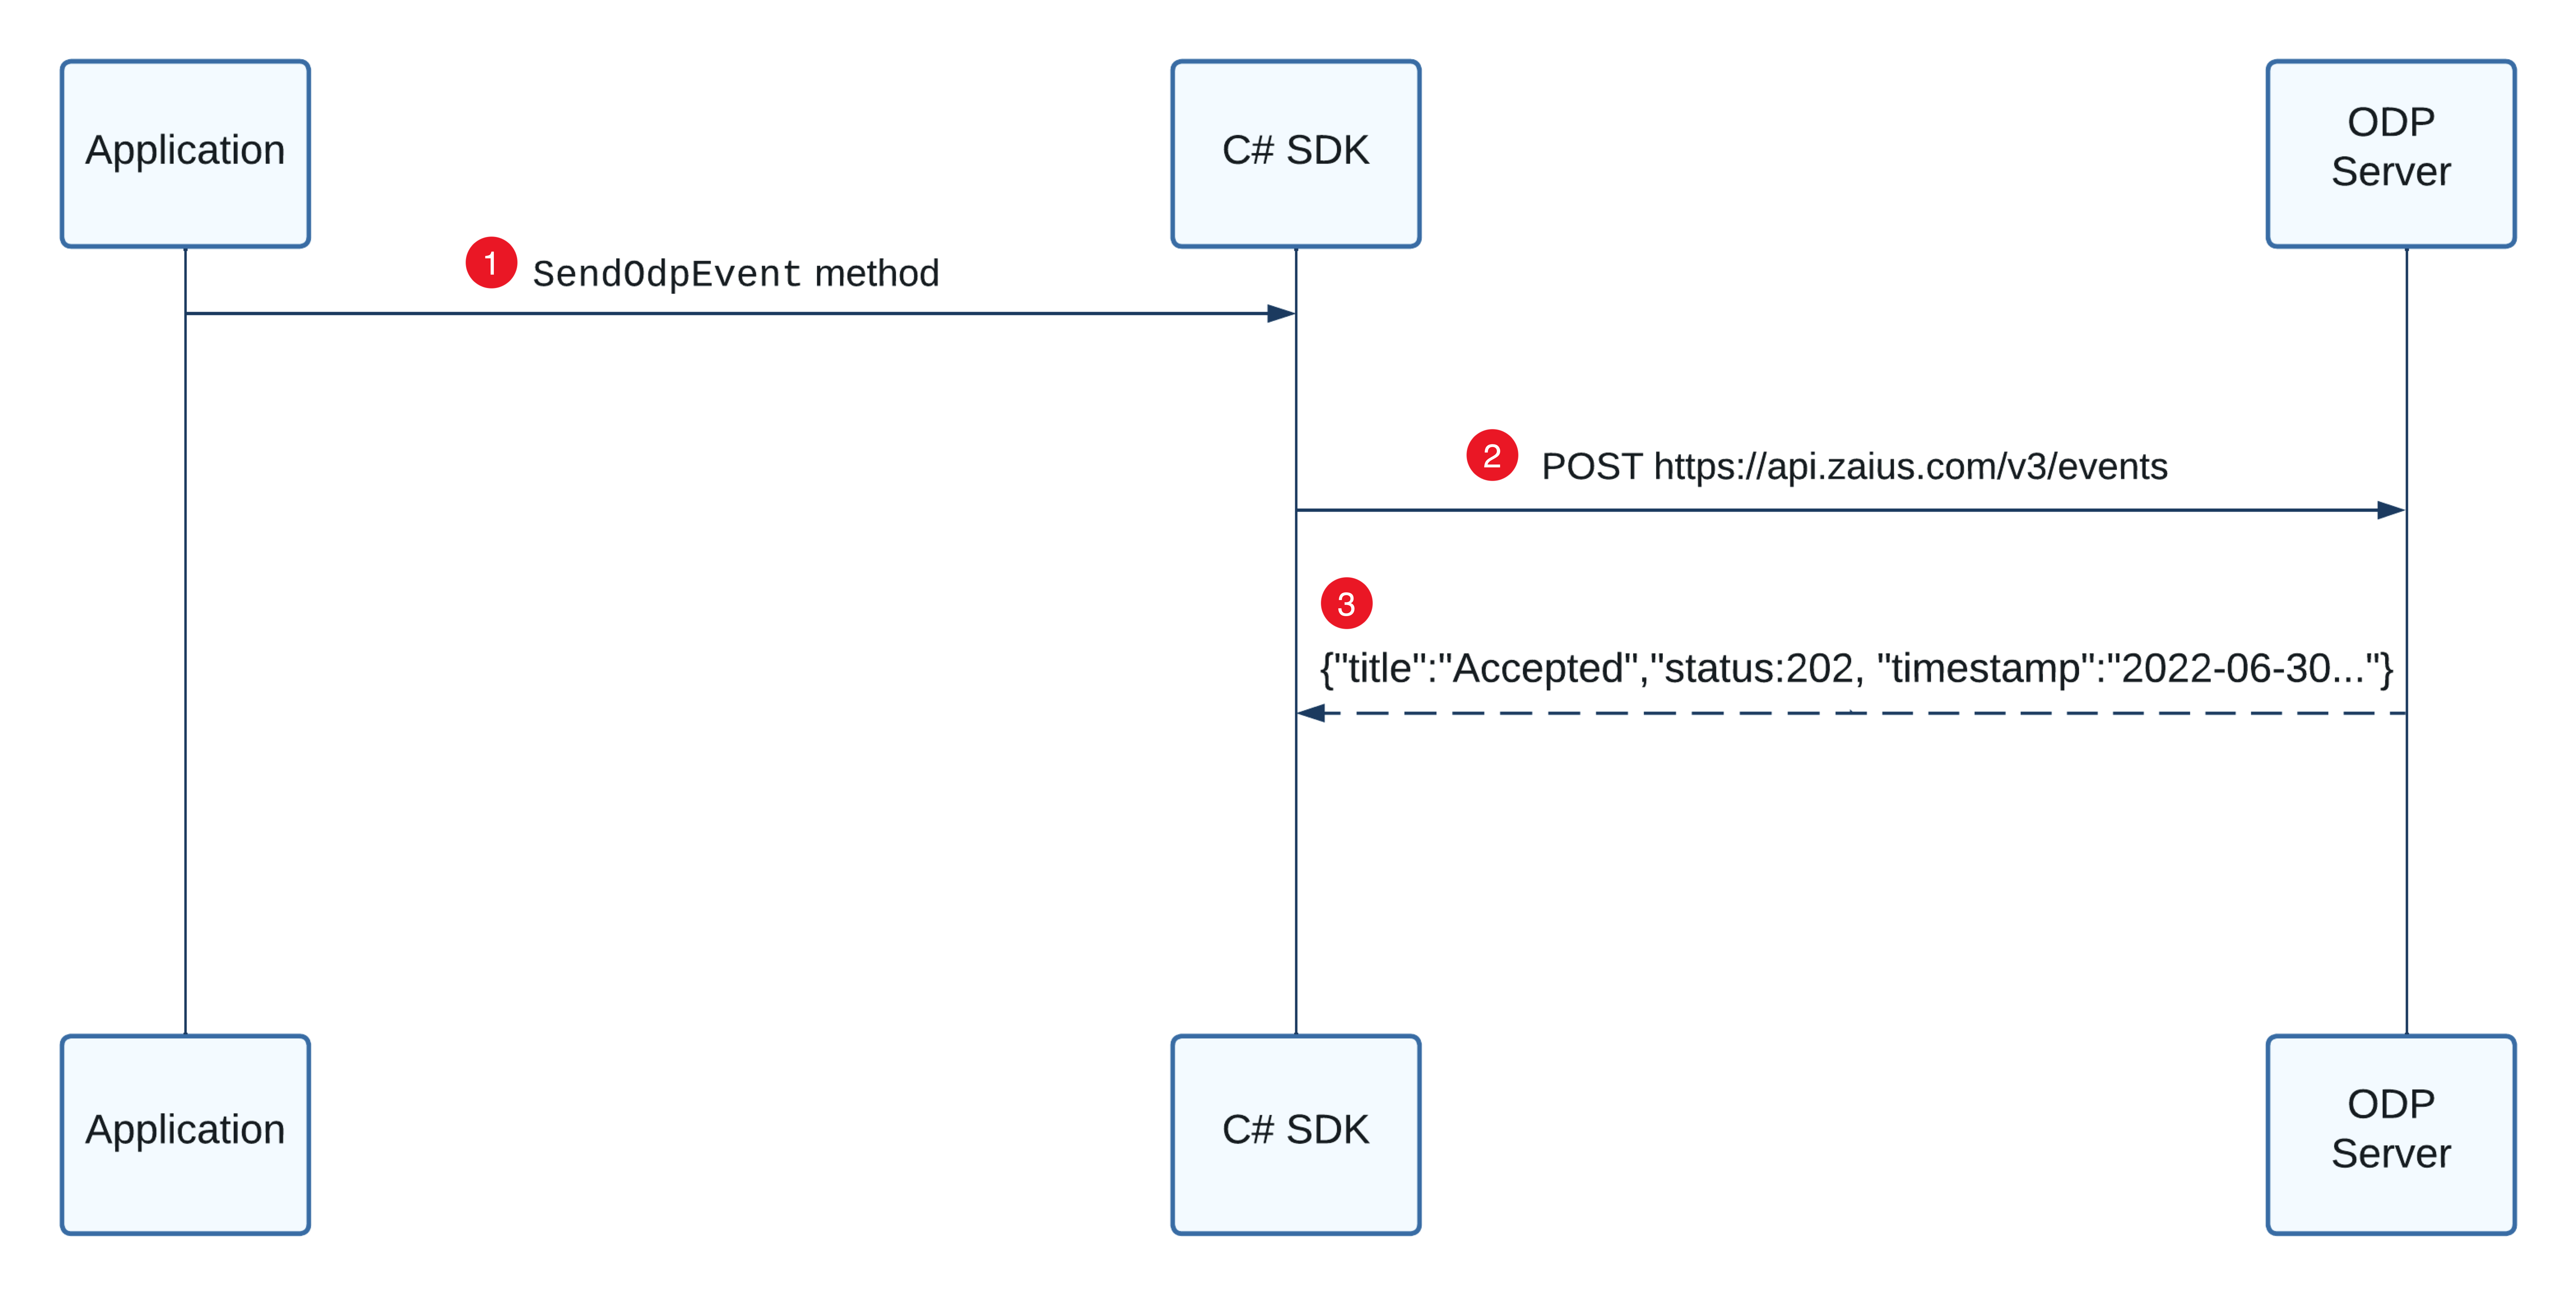 c# SDK to ODP network diagram